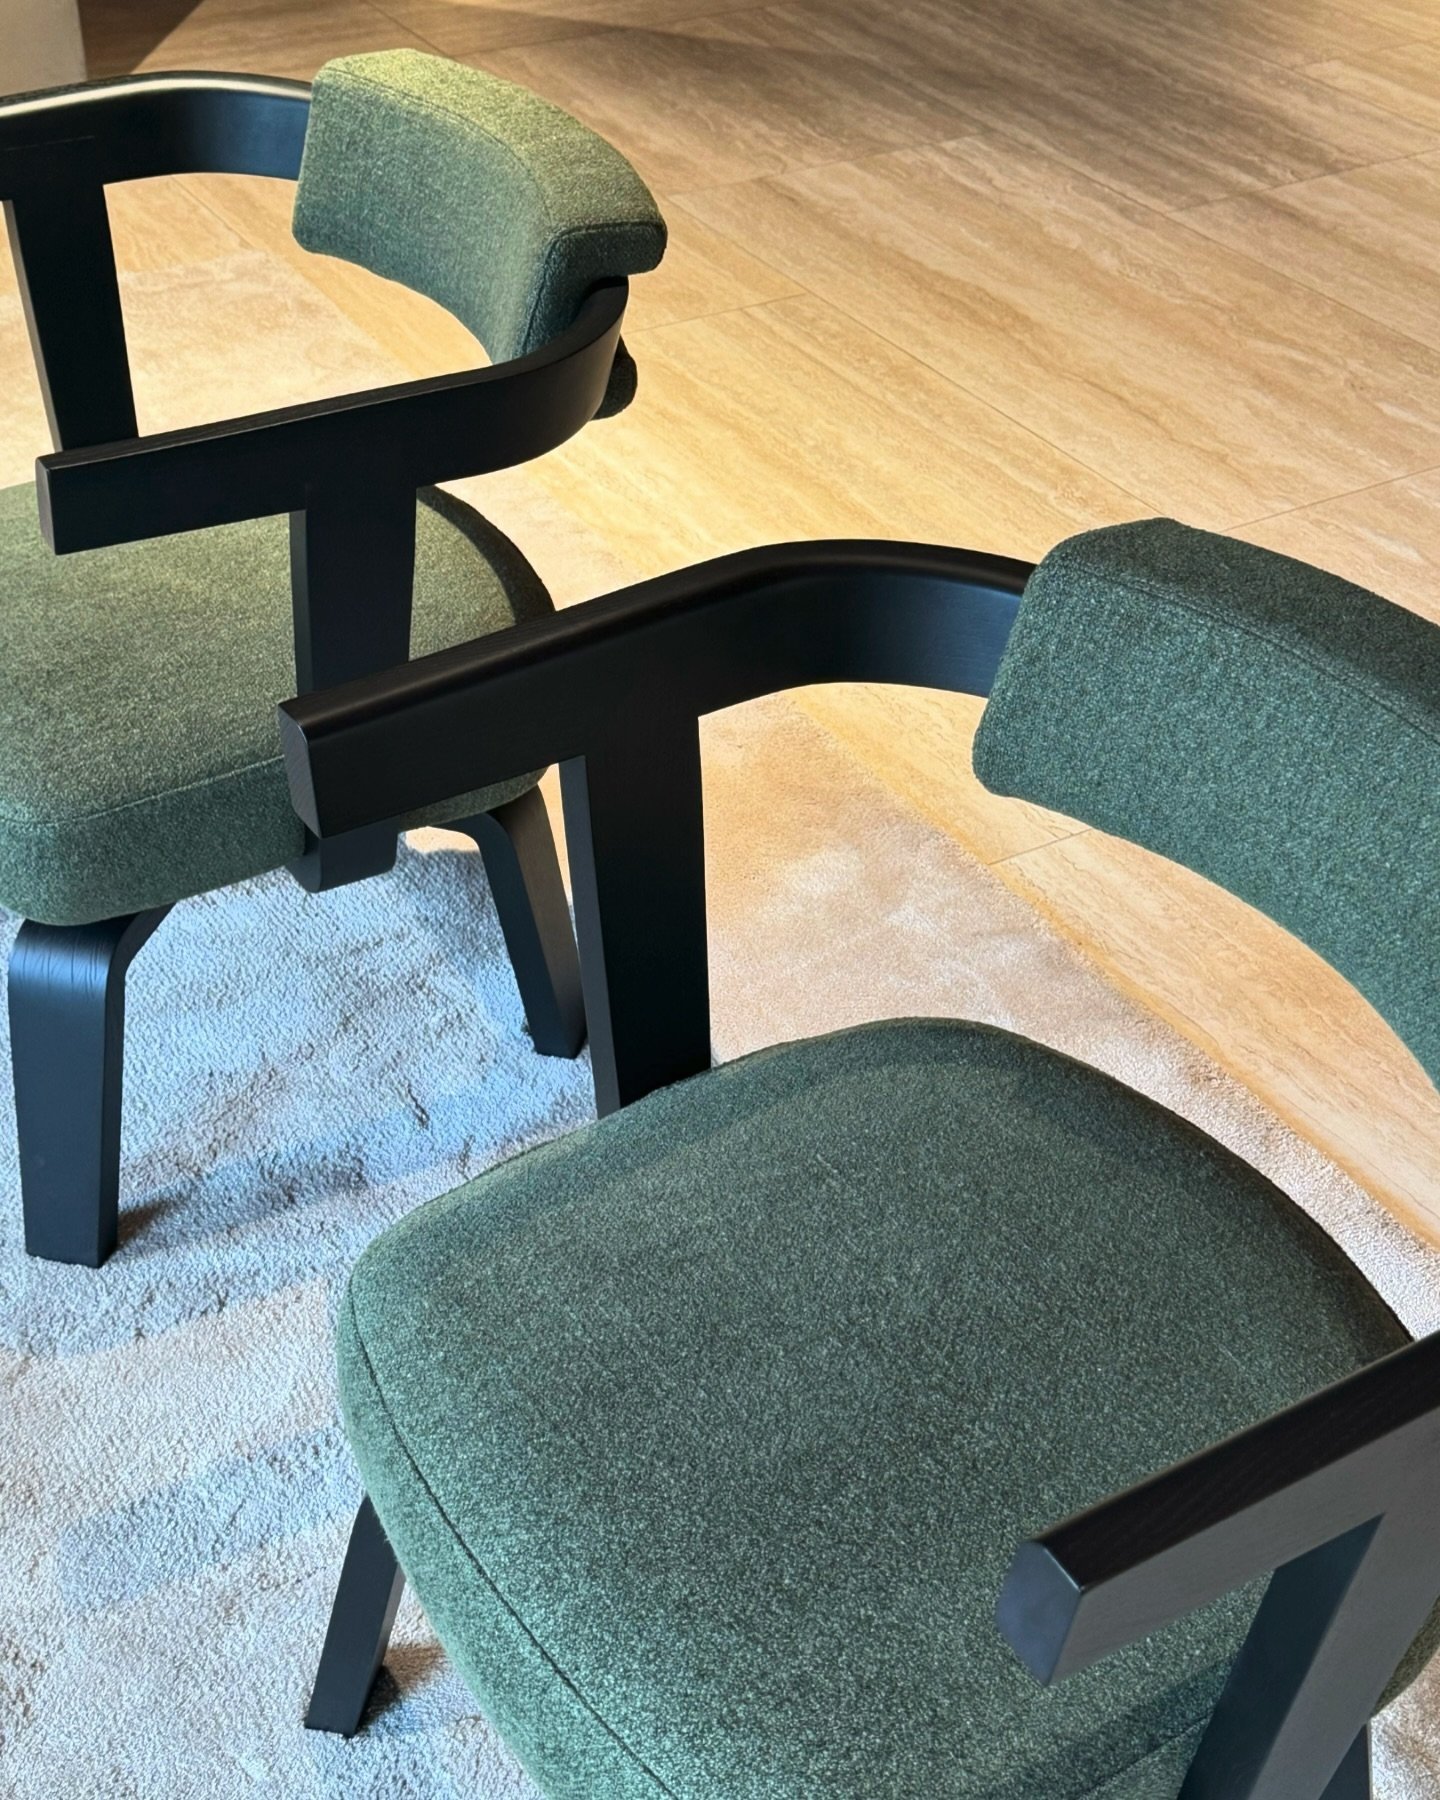 Beautiful range of chairs in @molteniandc showroom 👌🏻